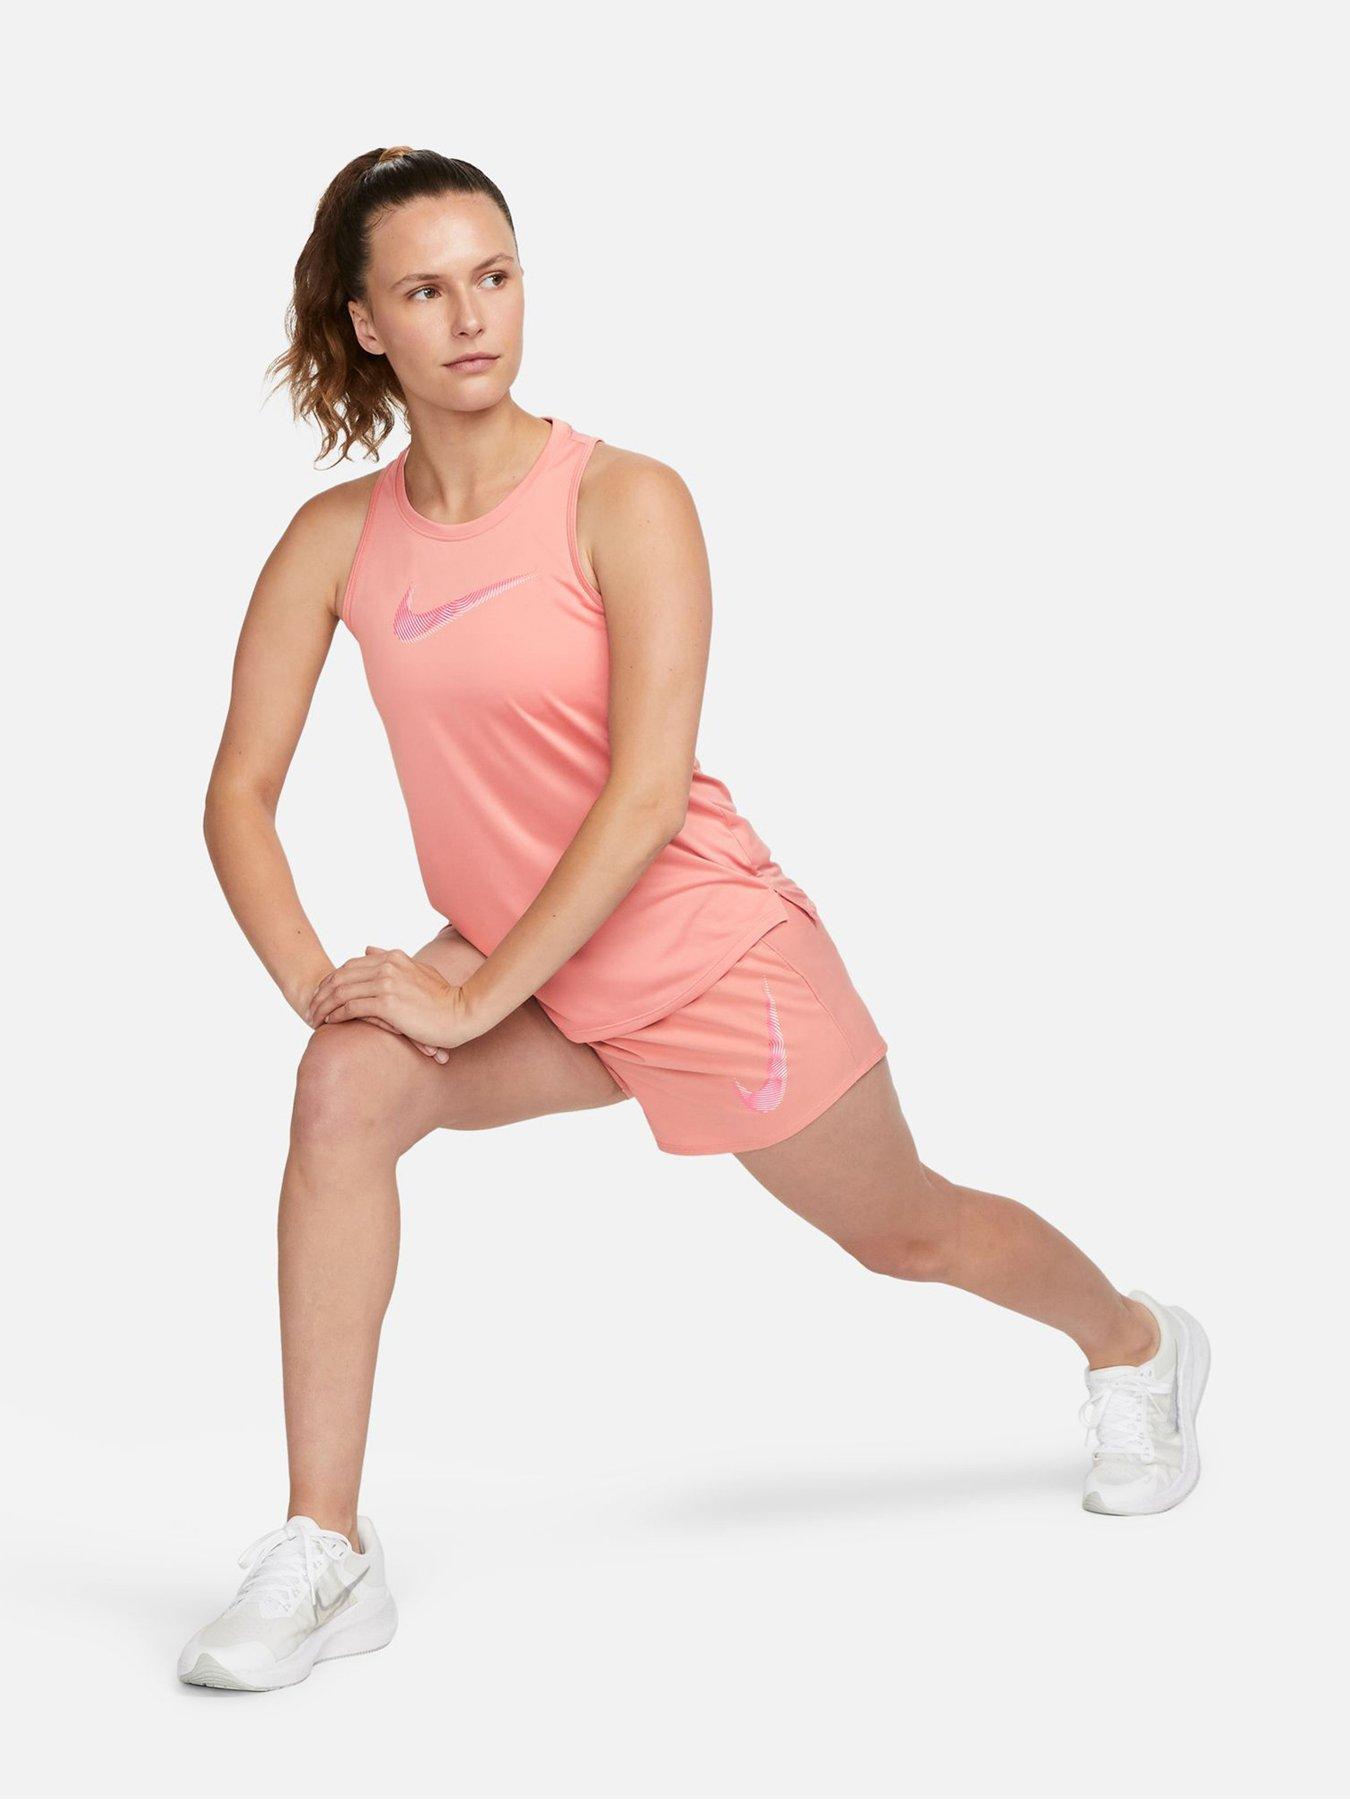 Nike Running Dri Fit Women's Size M Racerback Tank Top Vented Back